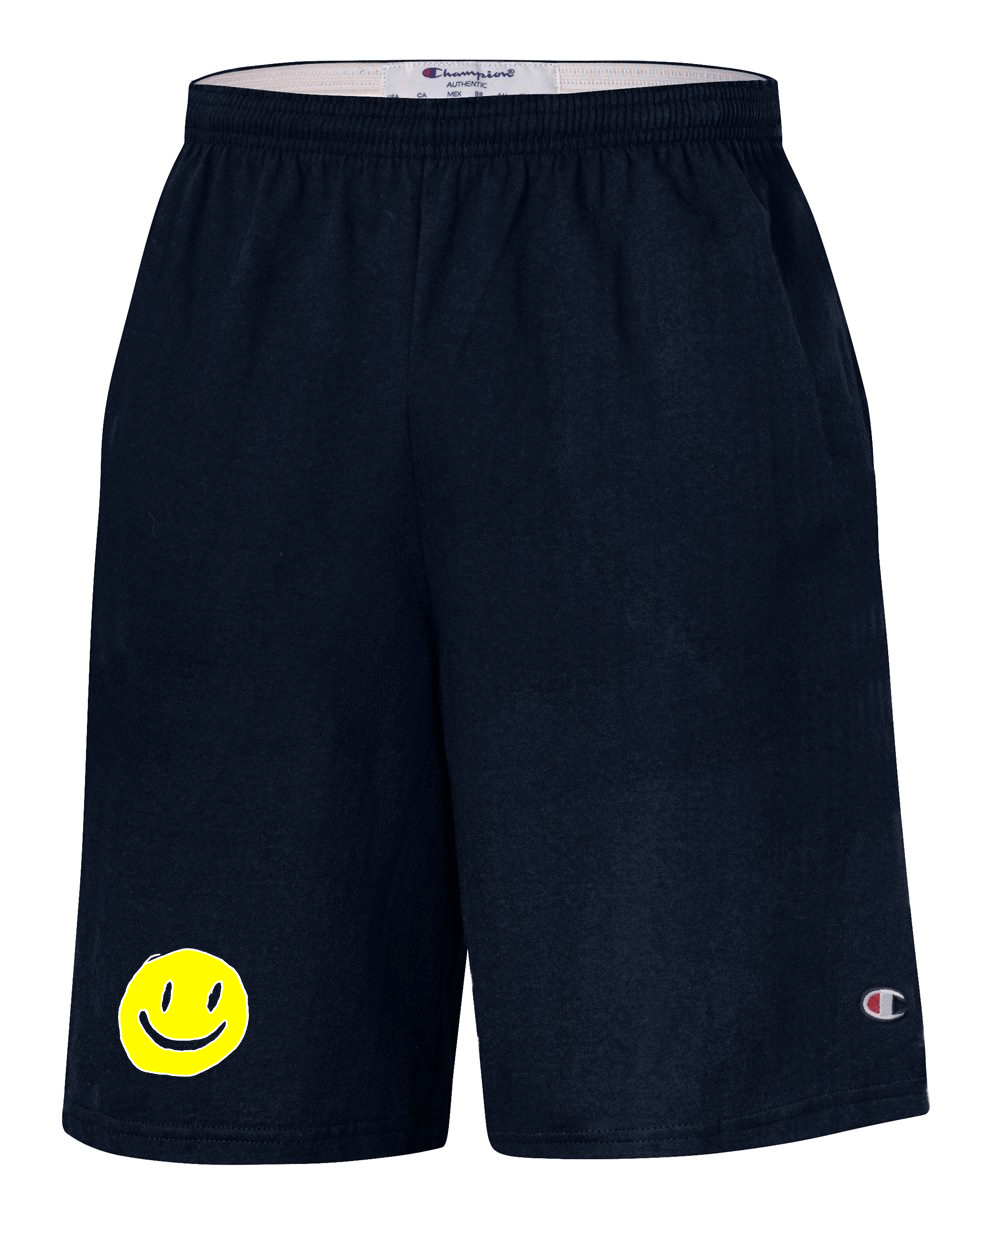 Smiley Pocket Shorts